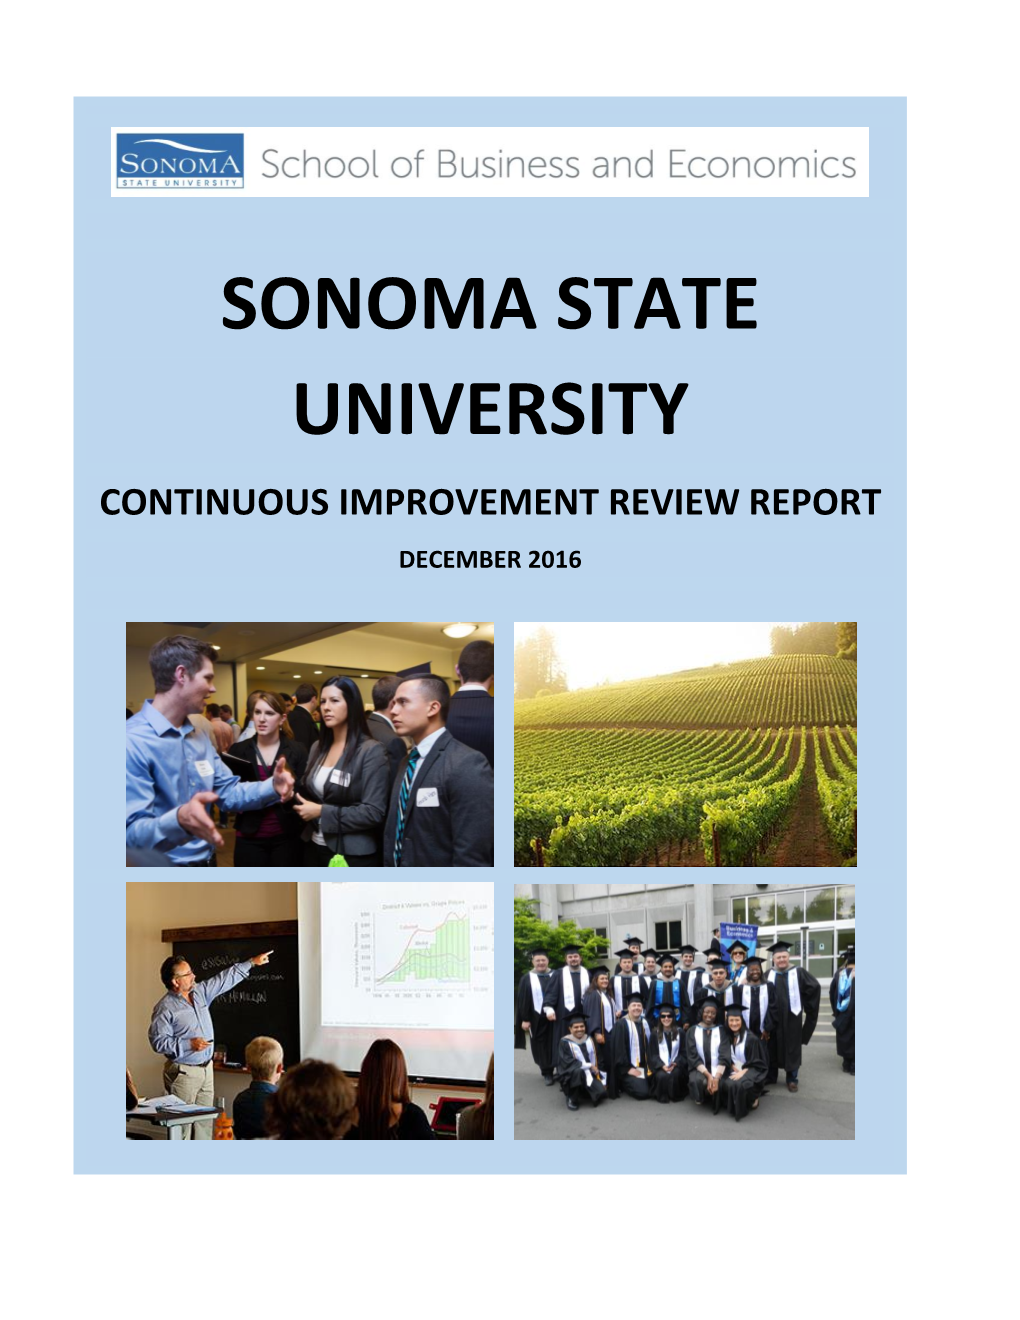 Sonoma State University's School of Business and Economics